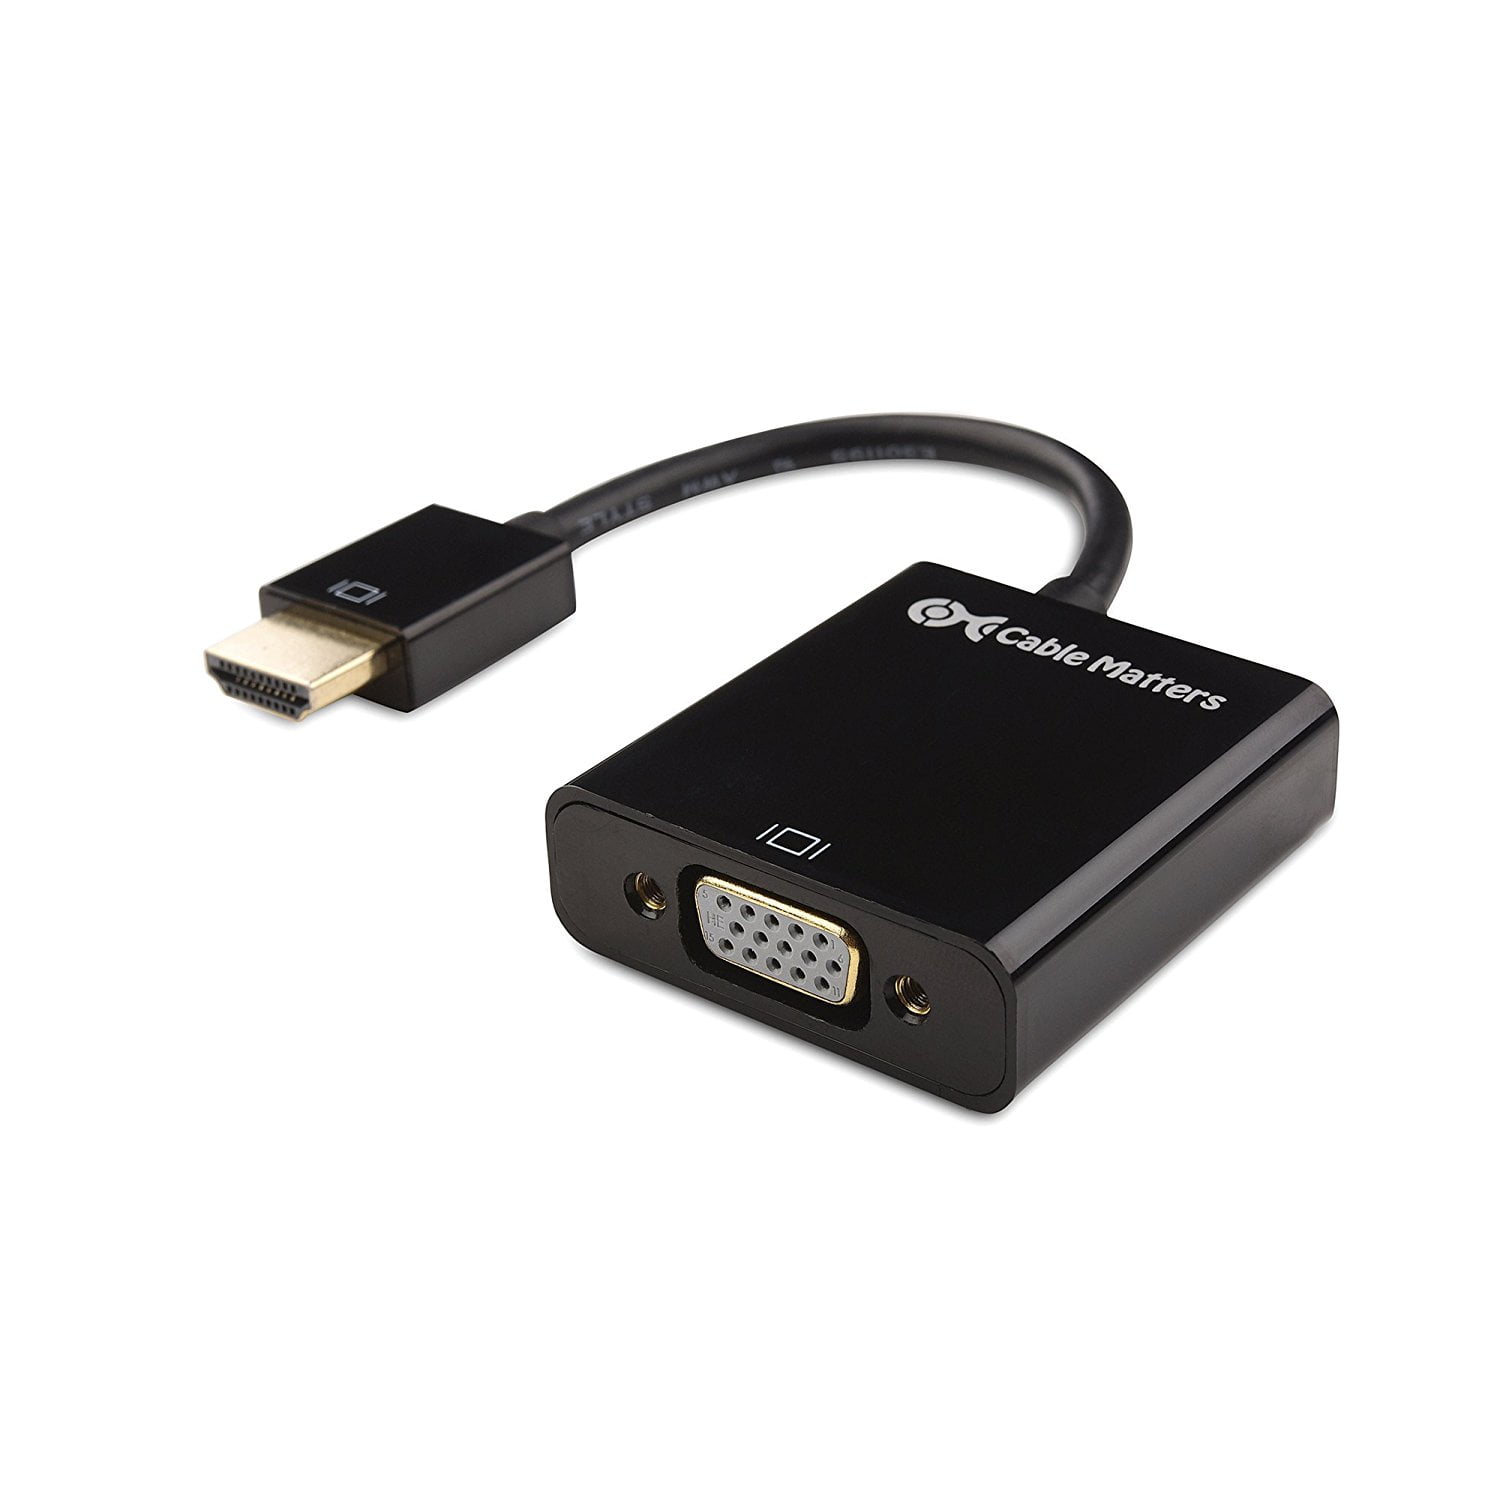 Cable Matters HDMI VGA Adapter (HDMI to VGA Converter) in Black - Walmart.com